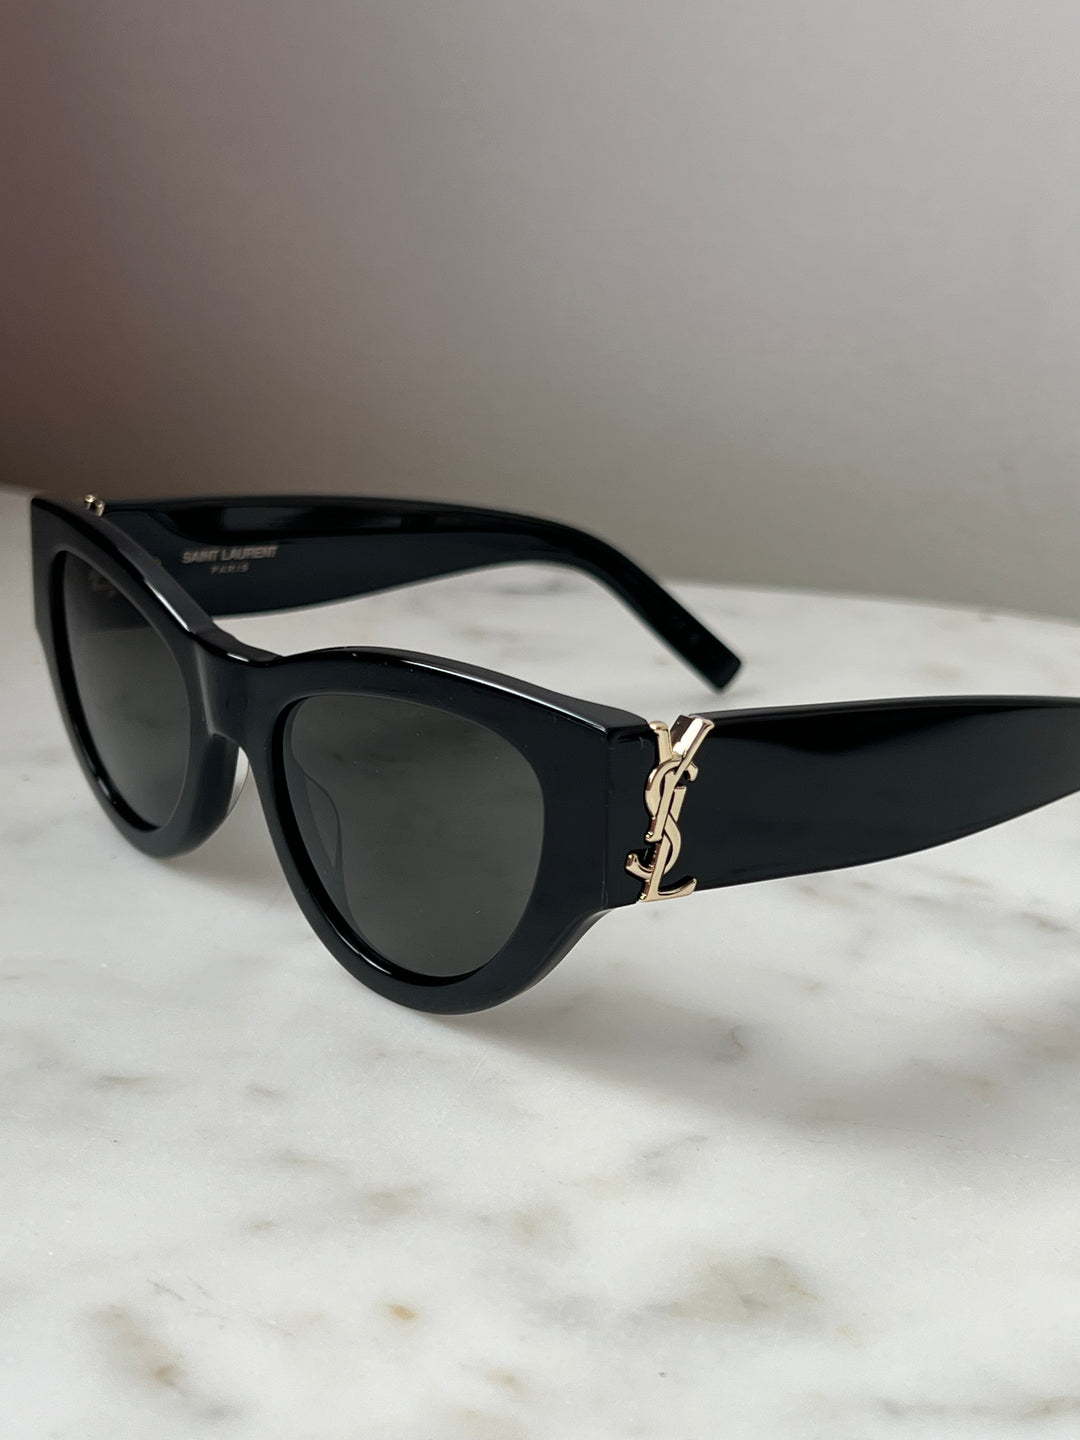 Saint Laurent SLM94 Sunglasses in Black